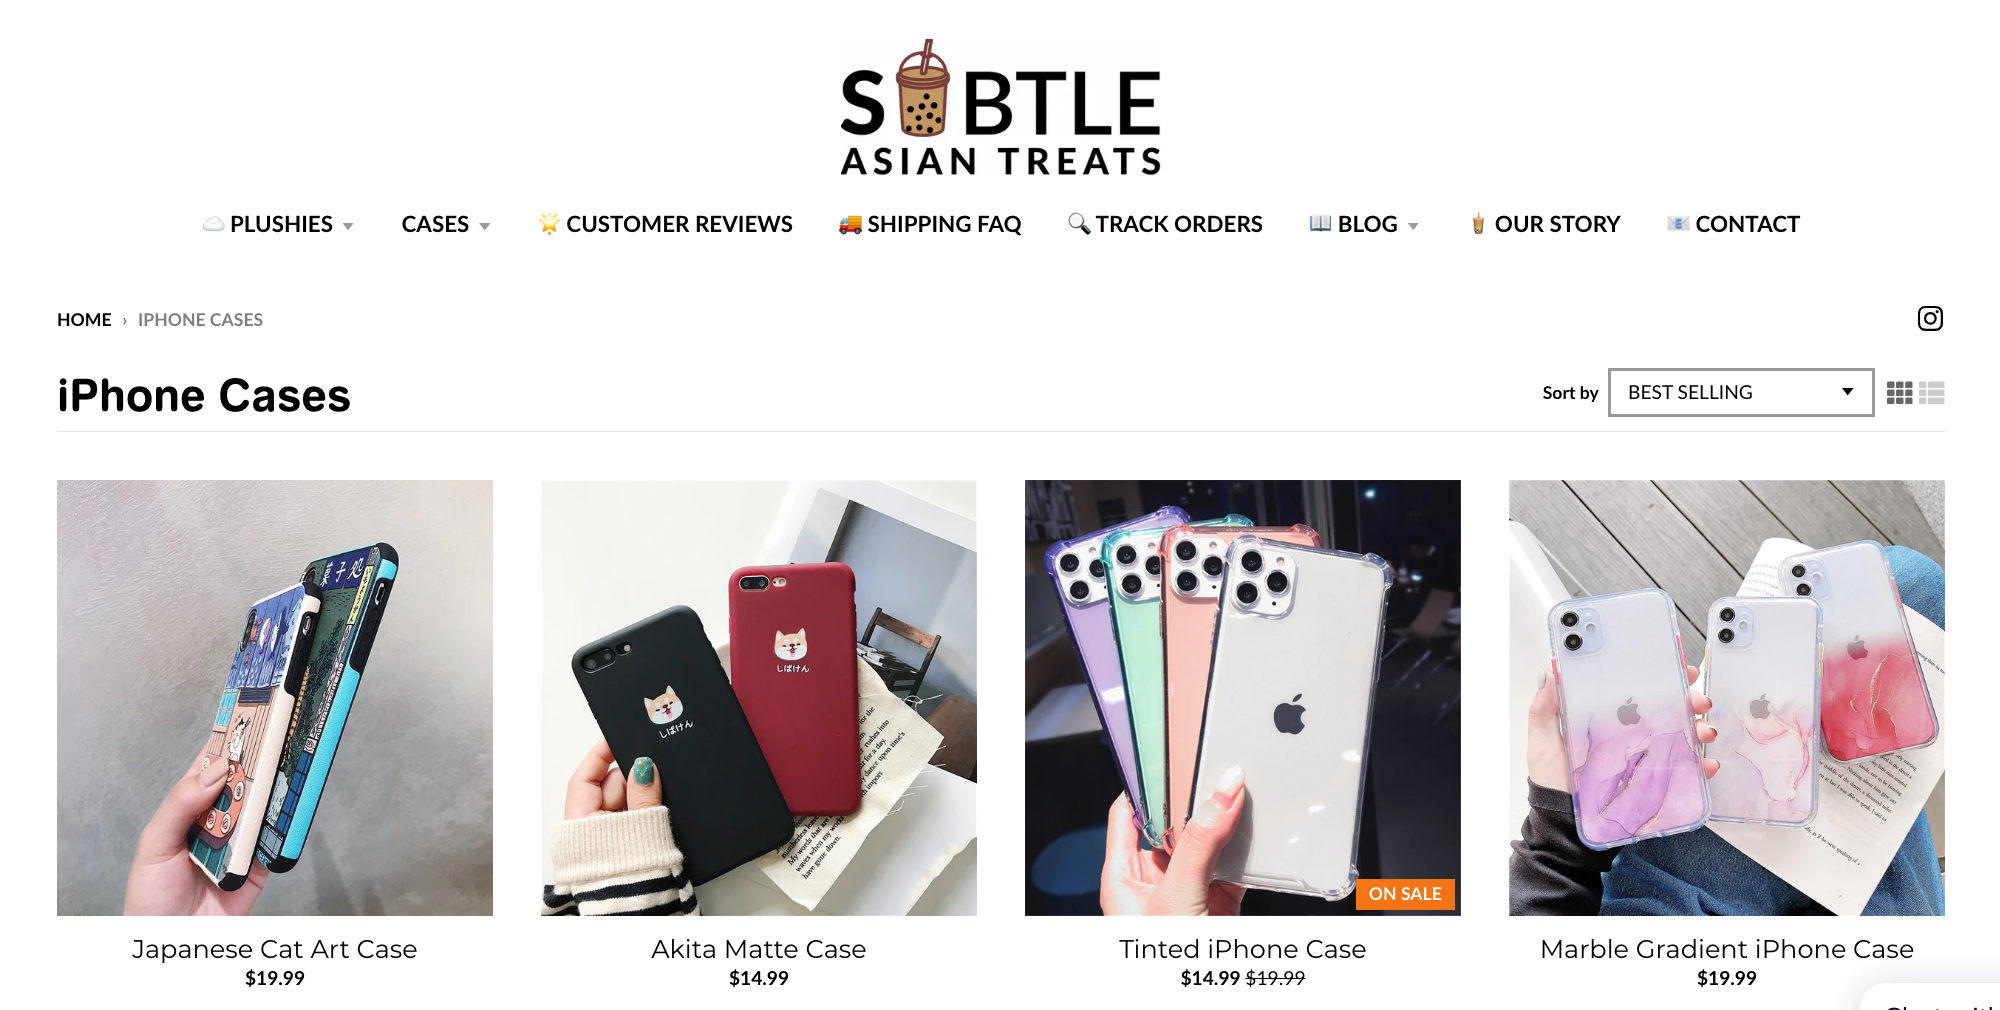 Screenshot of Subtle Asian Treats homepage.